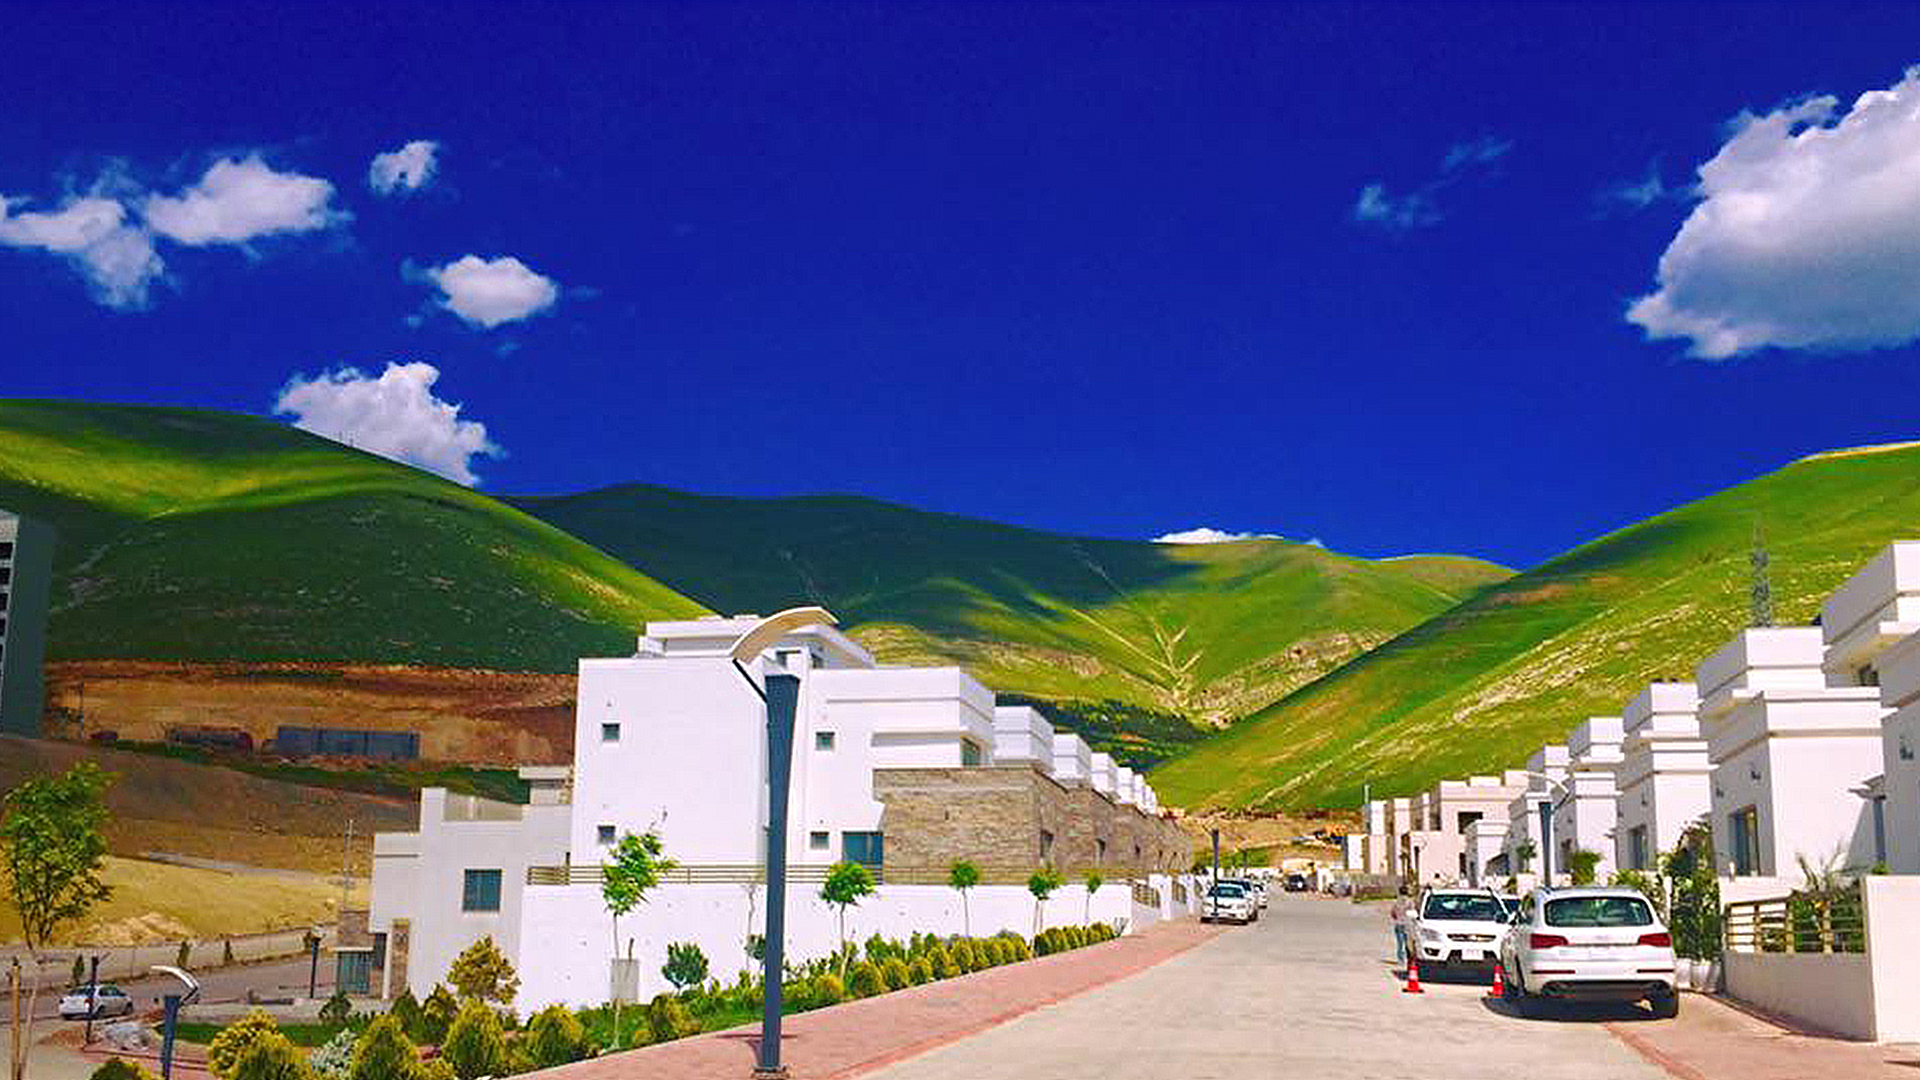 Sulaymaniyah Hills